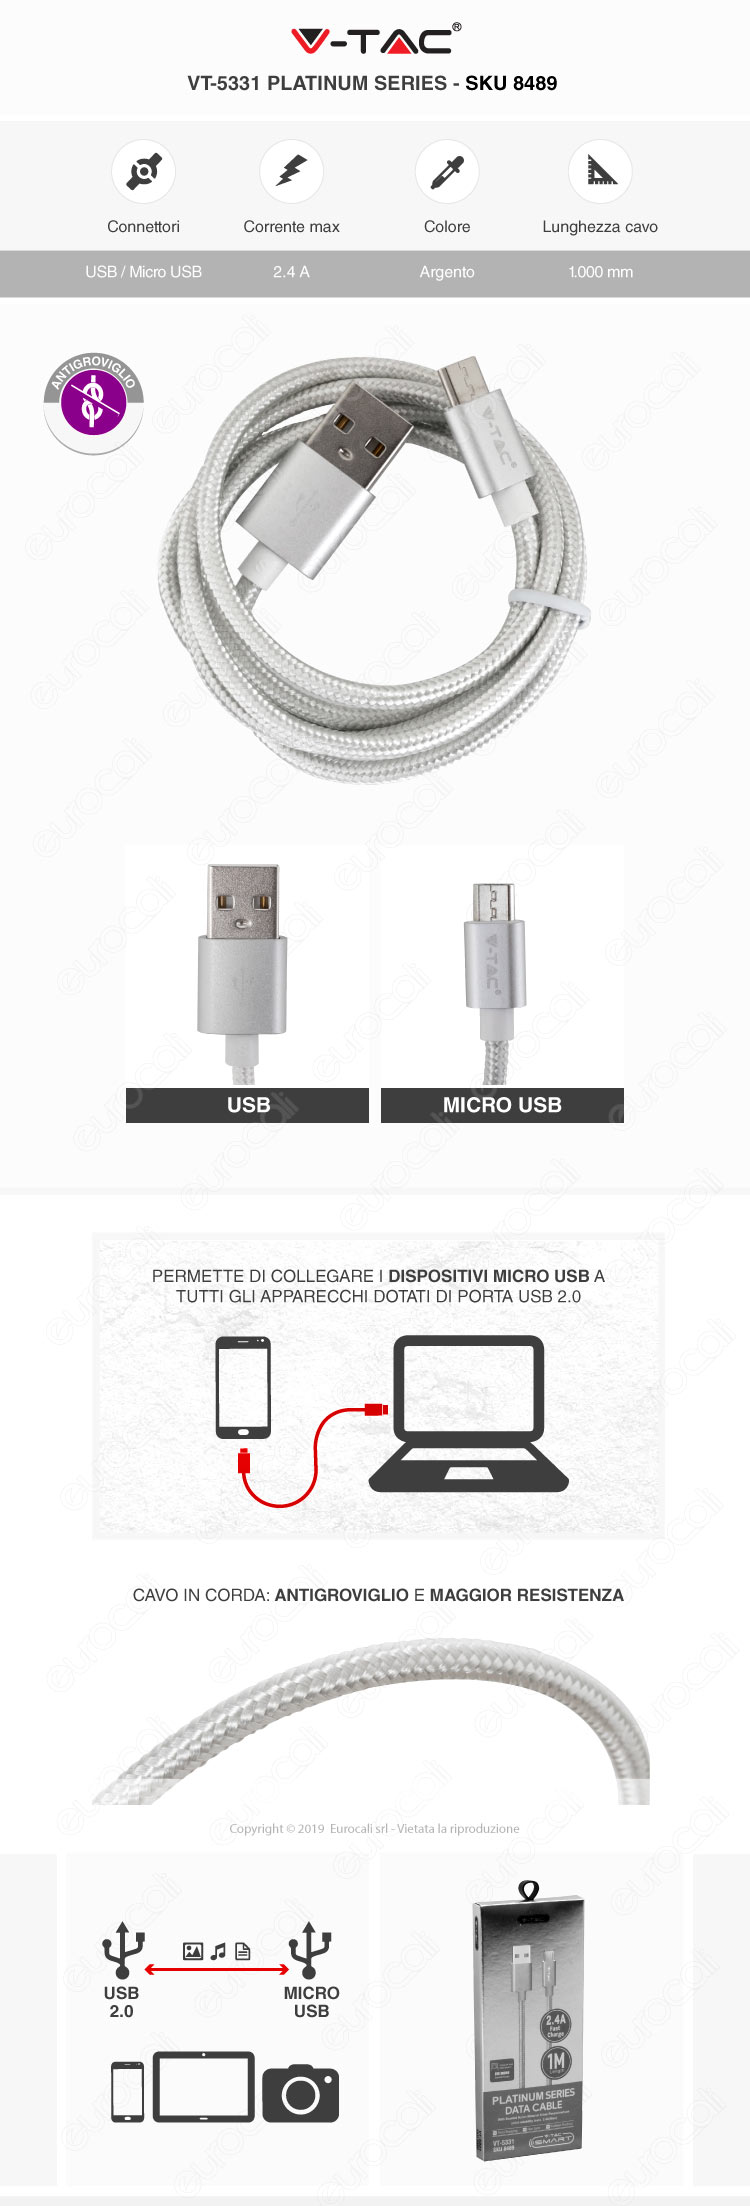 V-Tac VT-5331 platinum series USB Data Cable micro usb Cavo in corda Colore Argento 1m